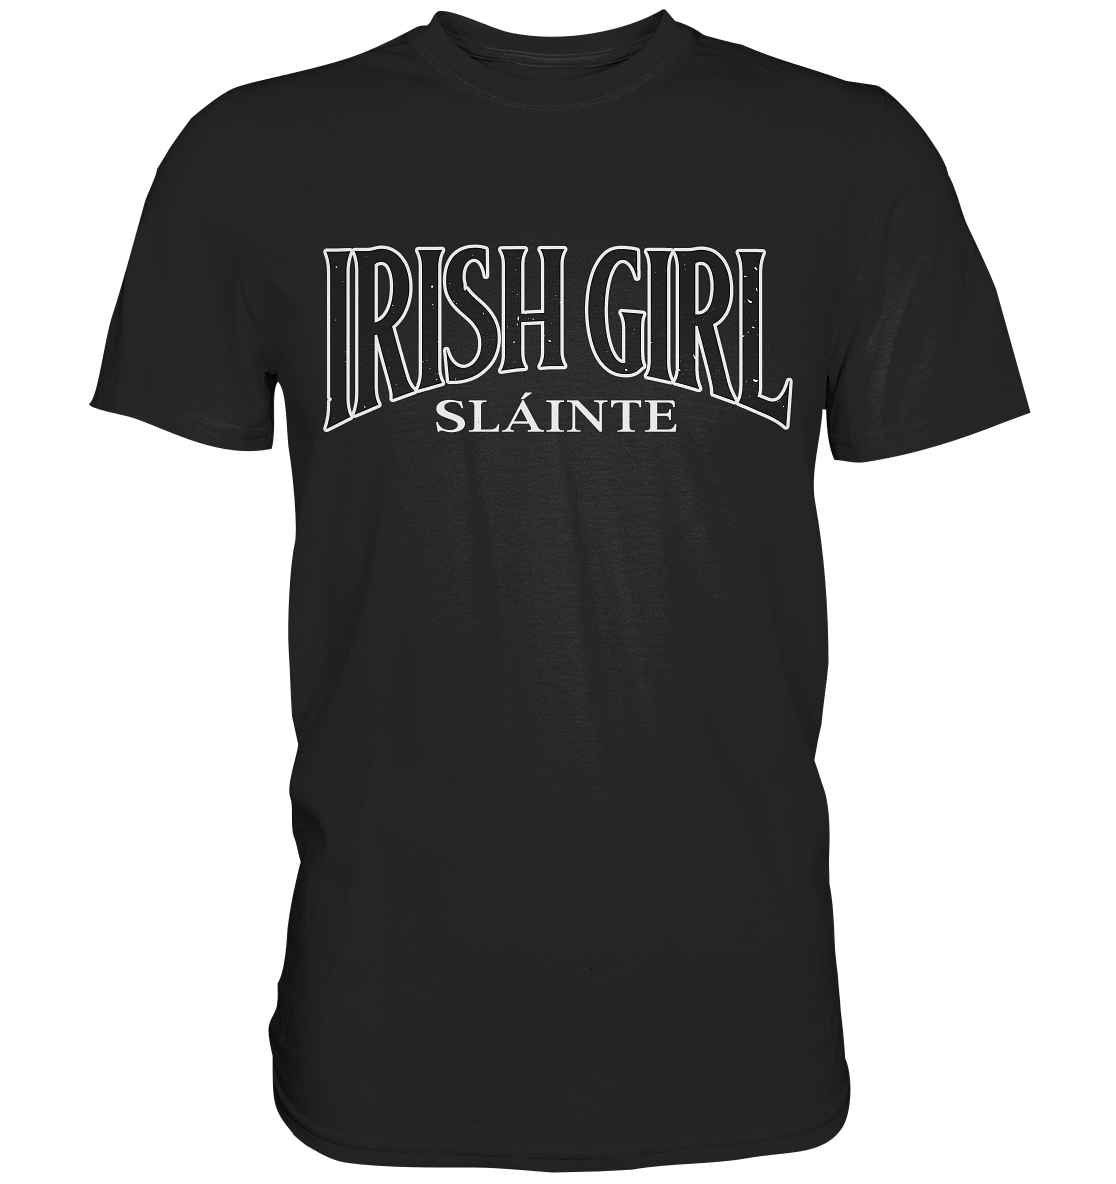 Irish Girl "Sláinte" - Premium Shirt